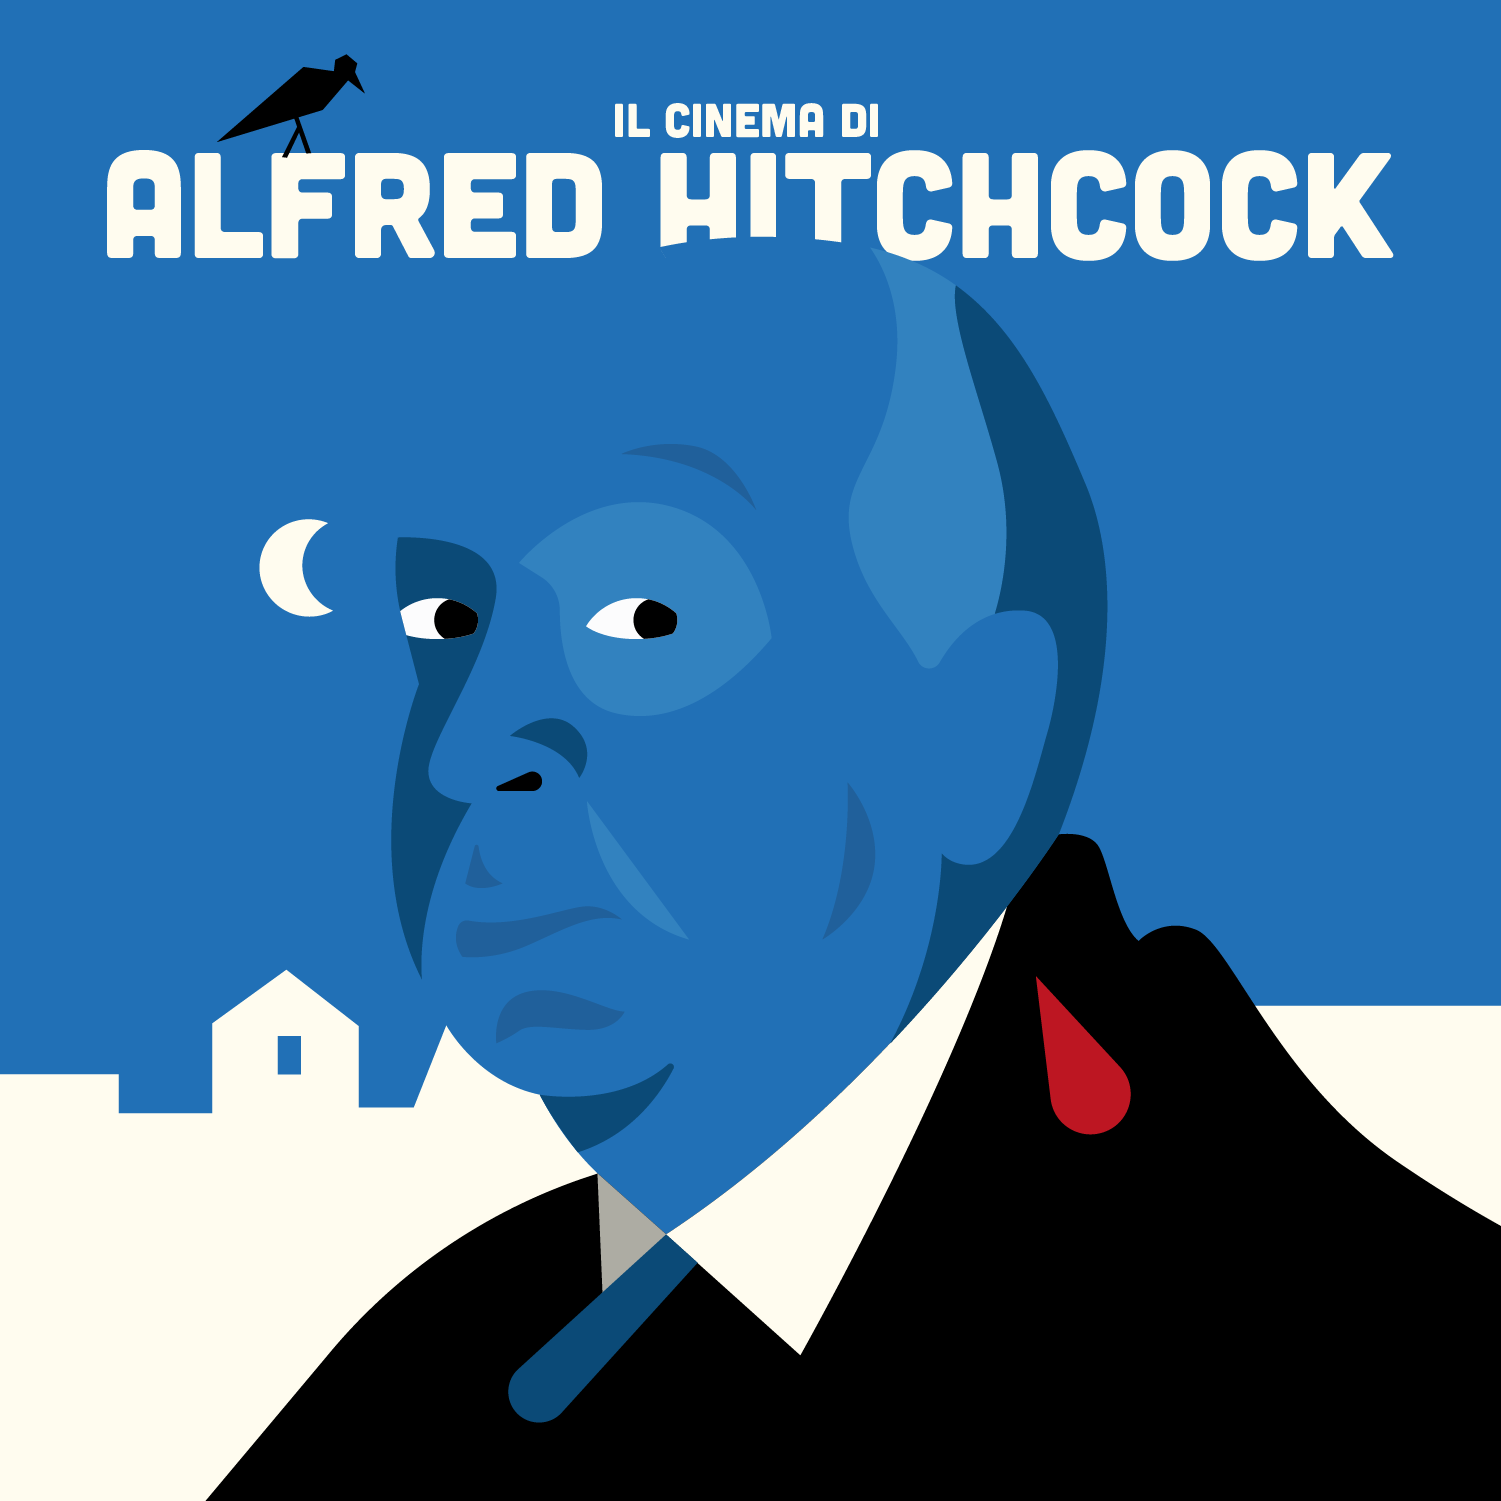 Alfred HItcock